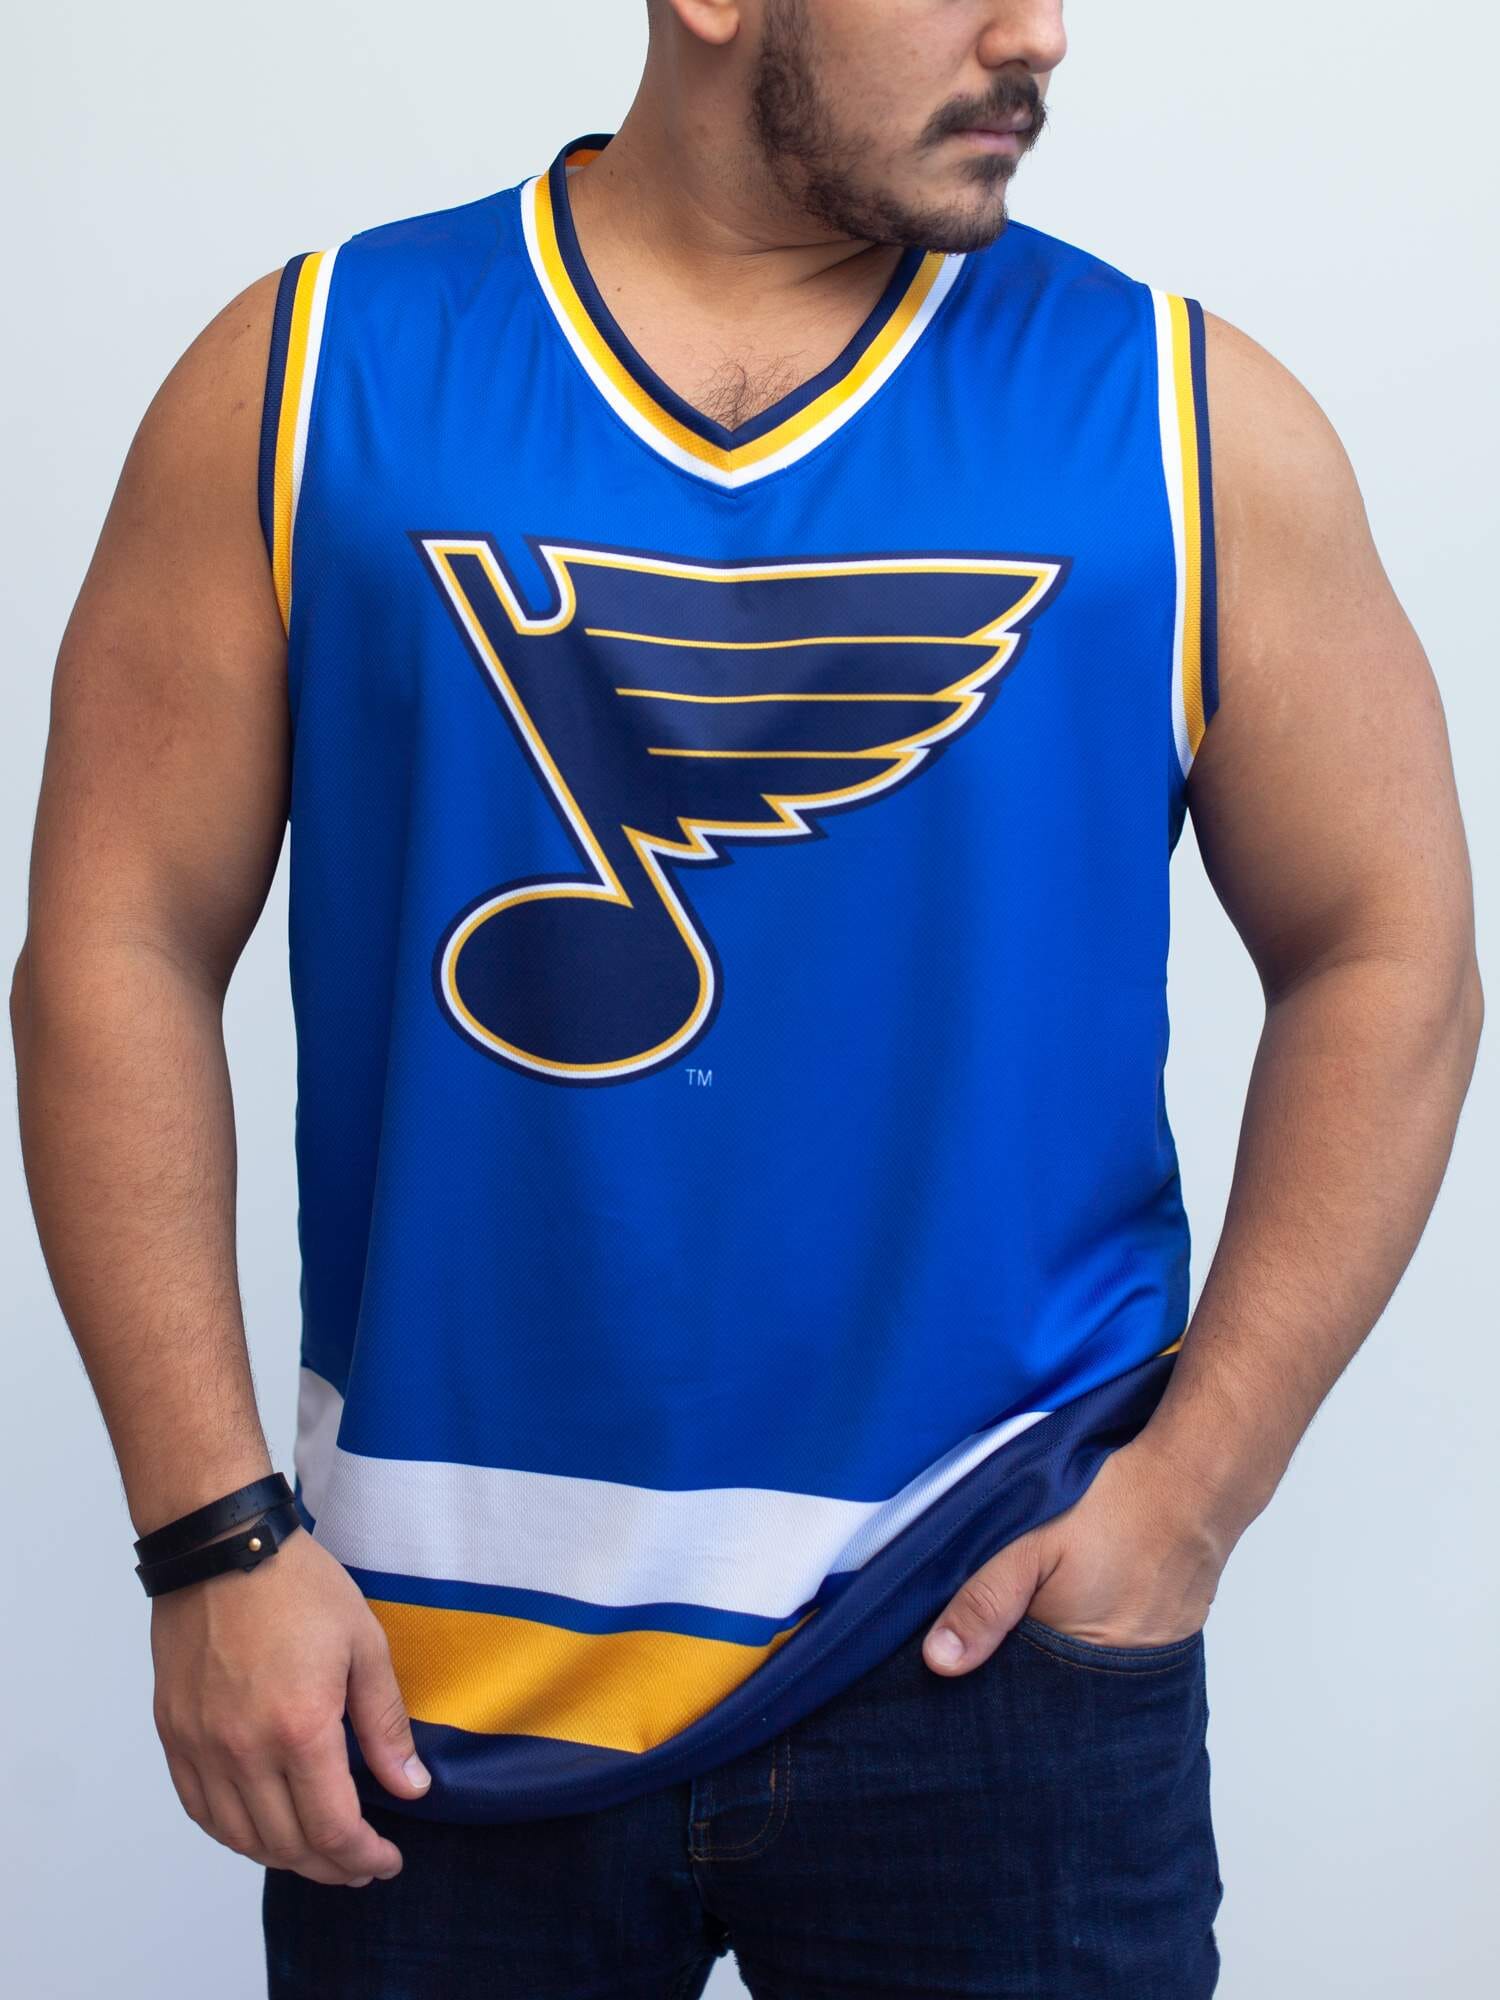 St. Louis Blues NHL Hockey Gray Short Sleeve T-Shirt Men's Large L